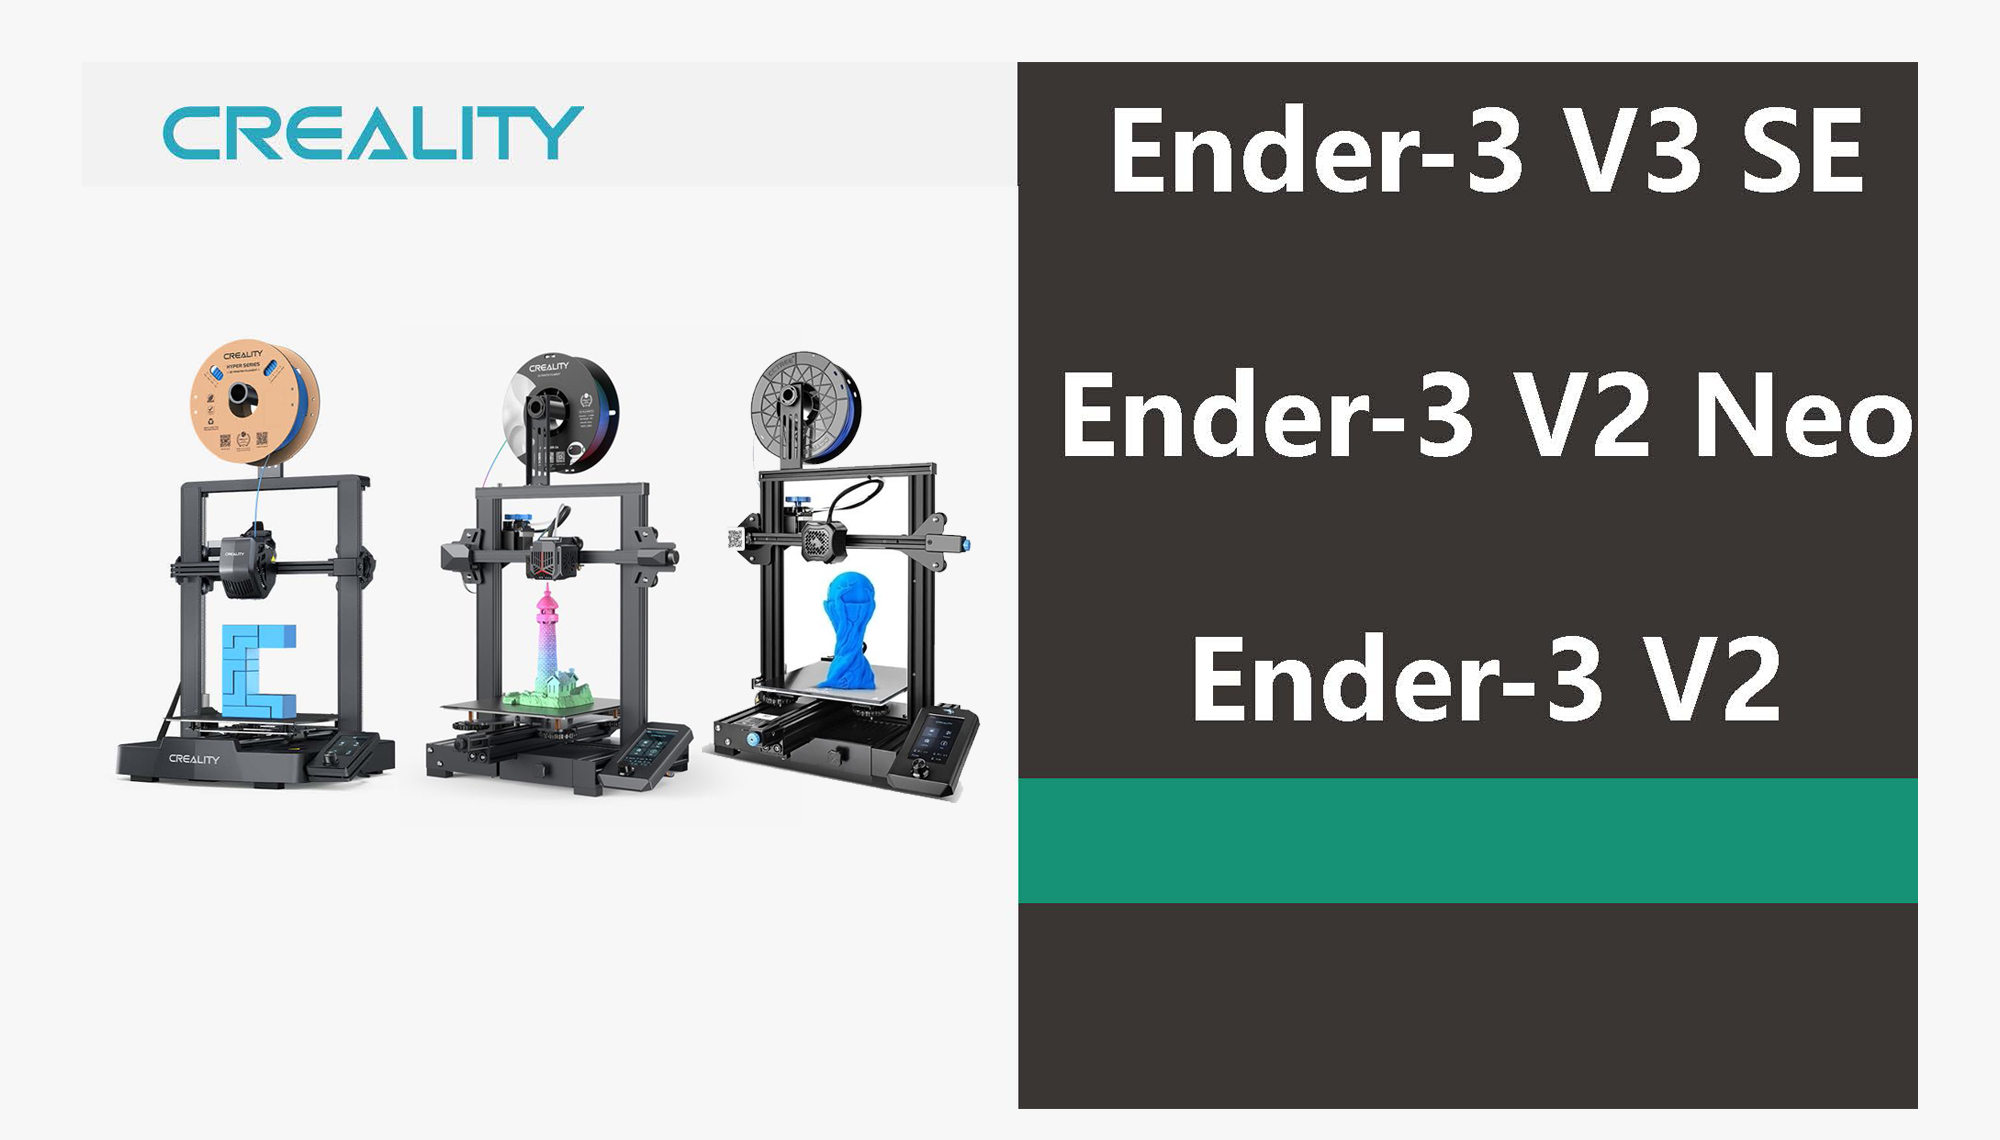 Ender 3 3D Printer Comparison Guide